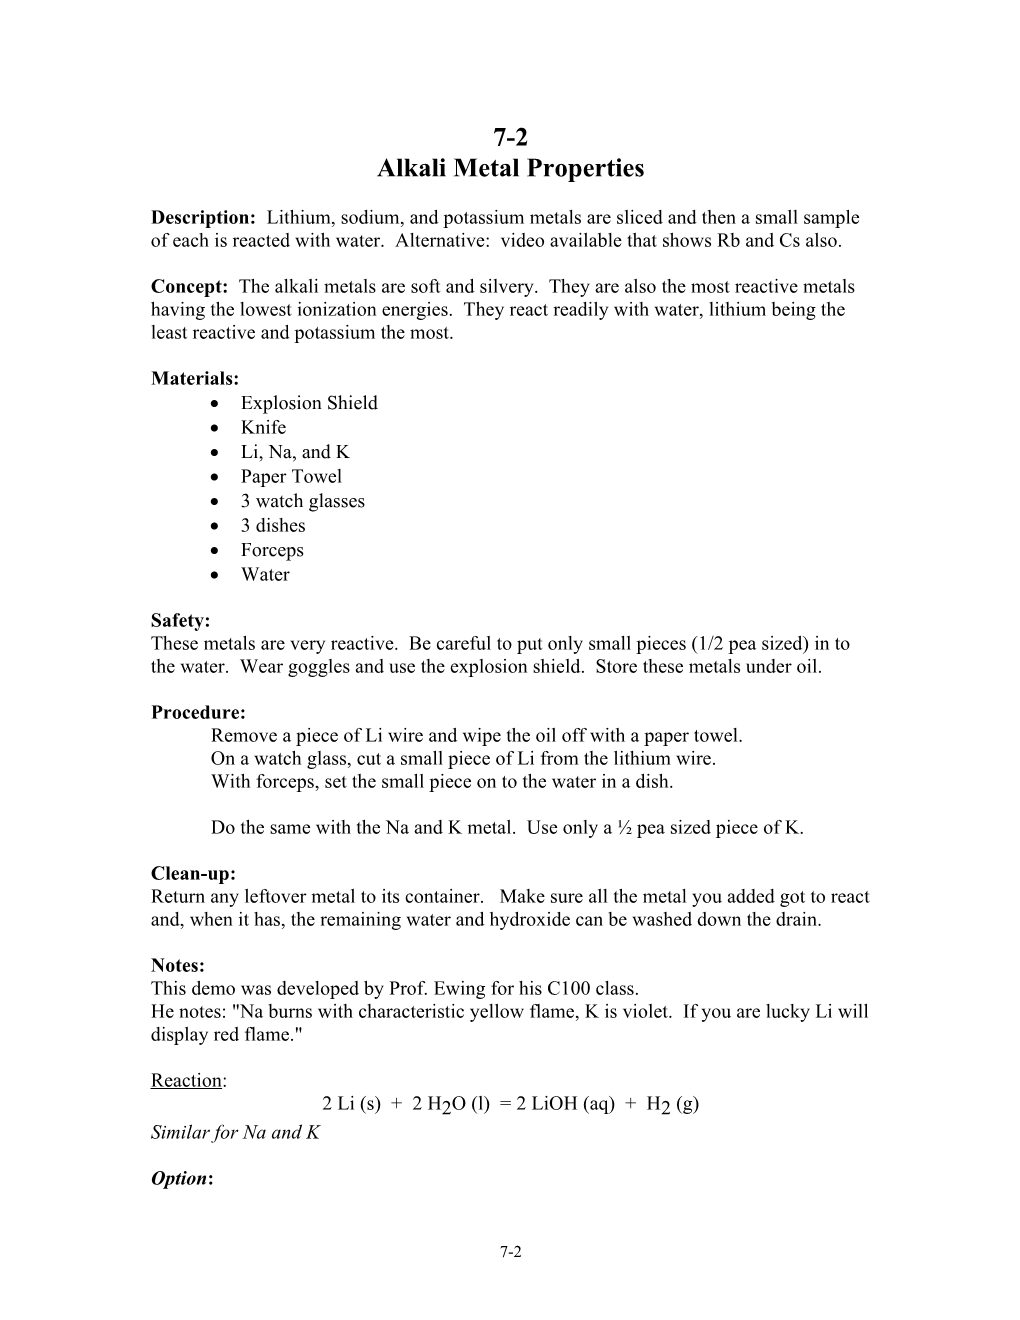 Alkali Metal Properties